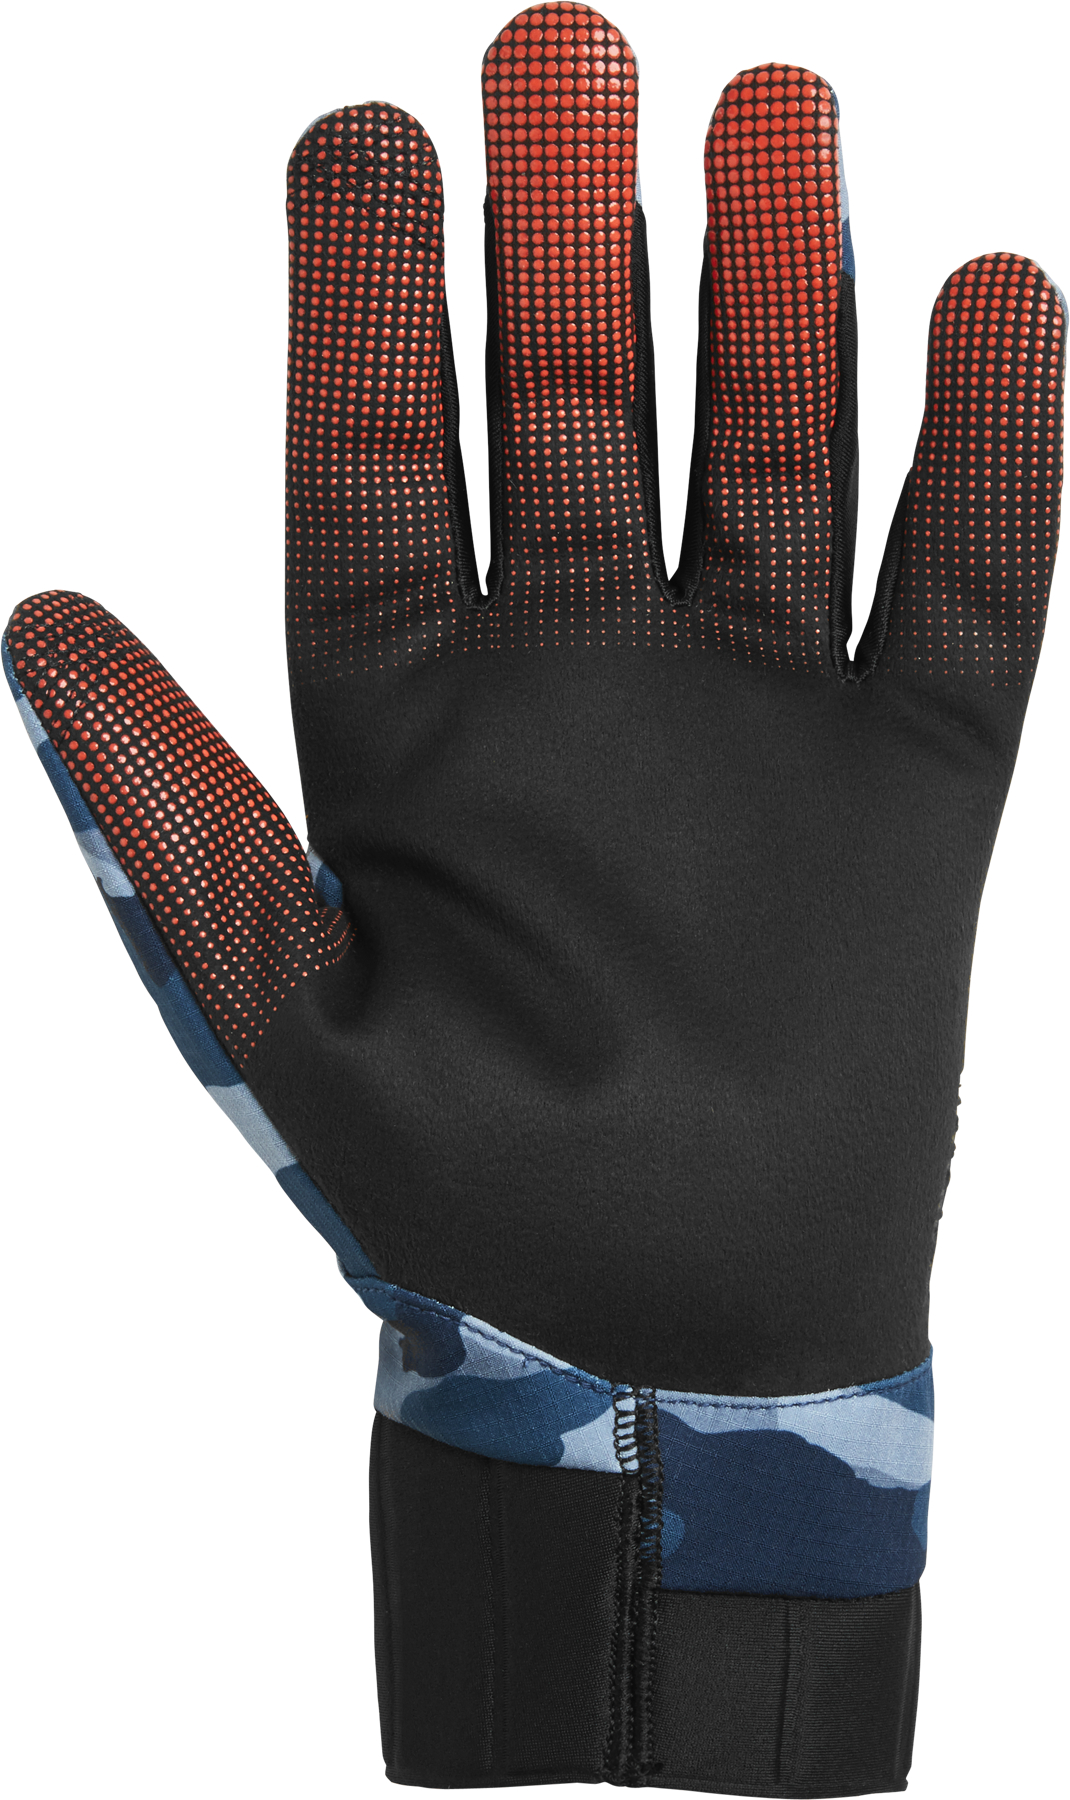 Fox Defend Pro Fire Glove Blue Camo